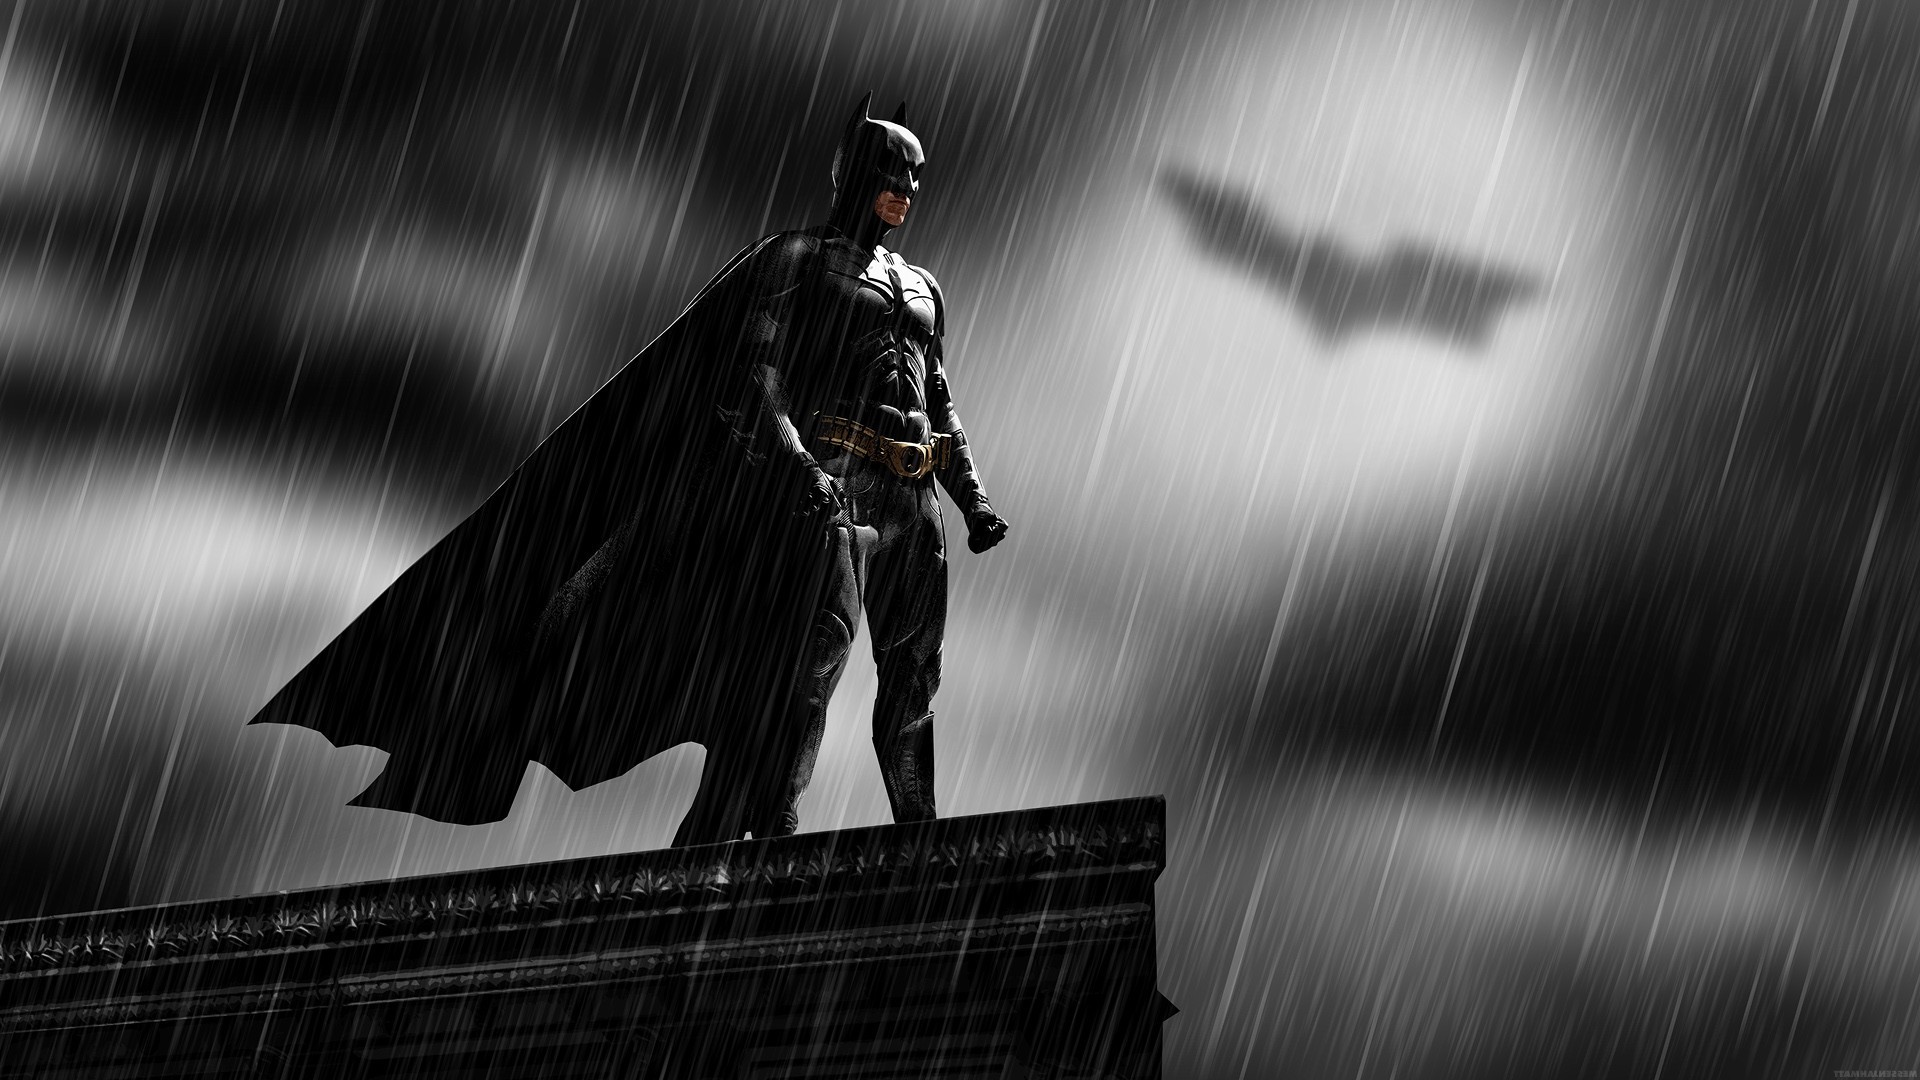 Batman Rooftops Rain Bat Signal Messenjahmatt People